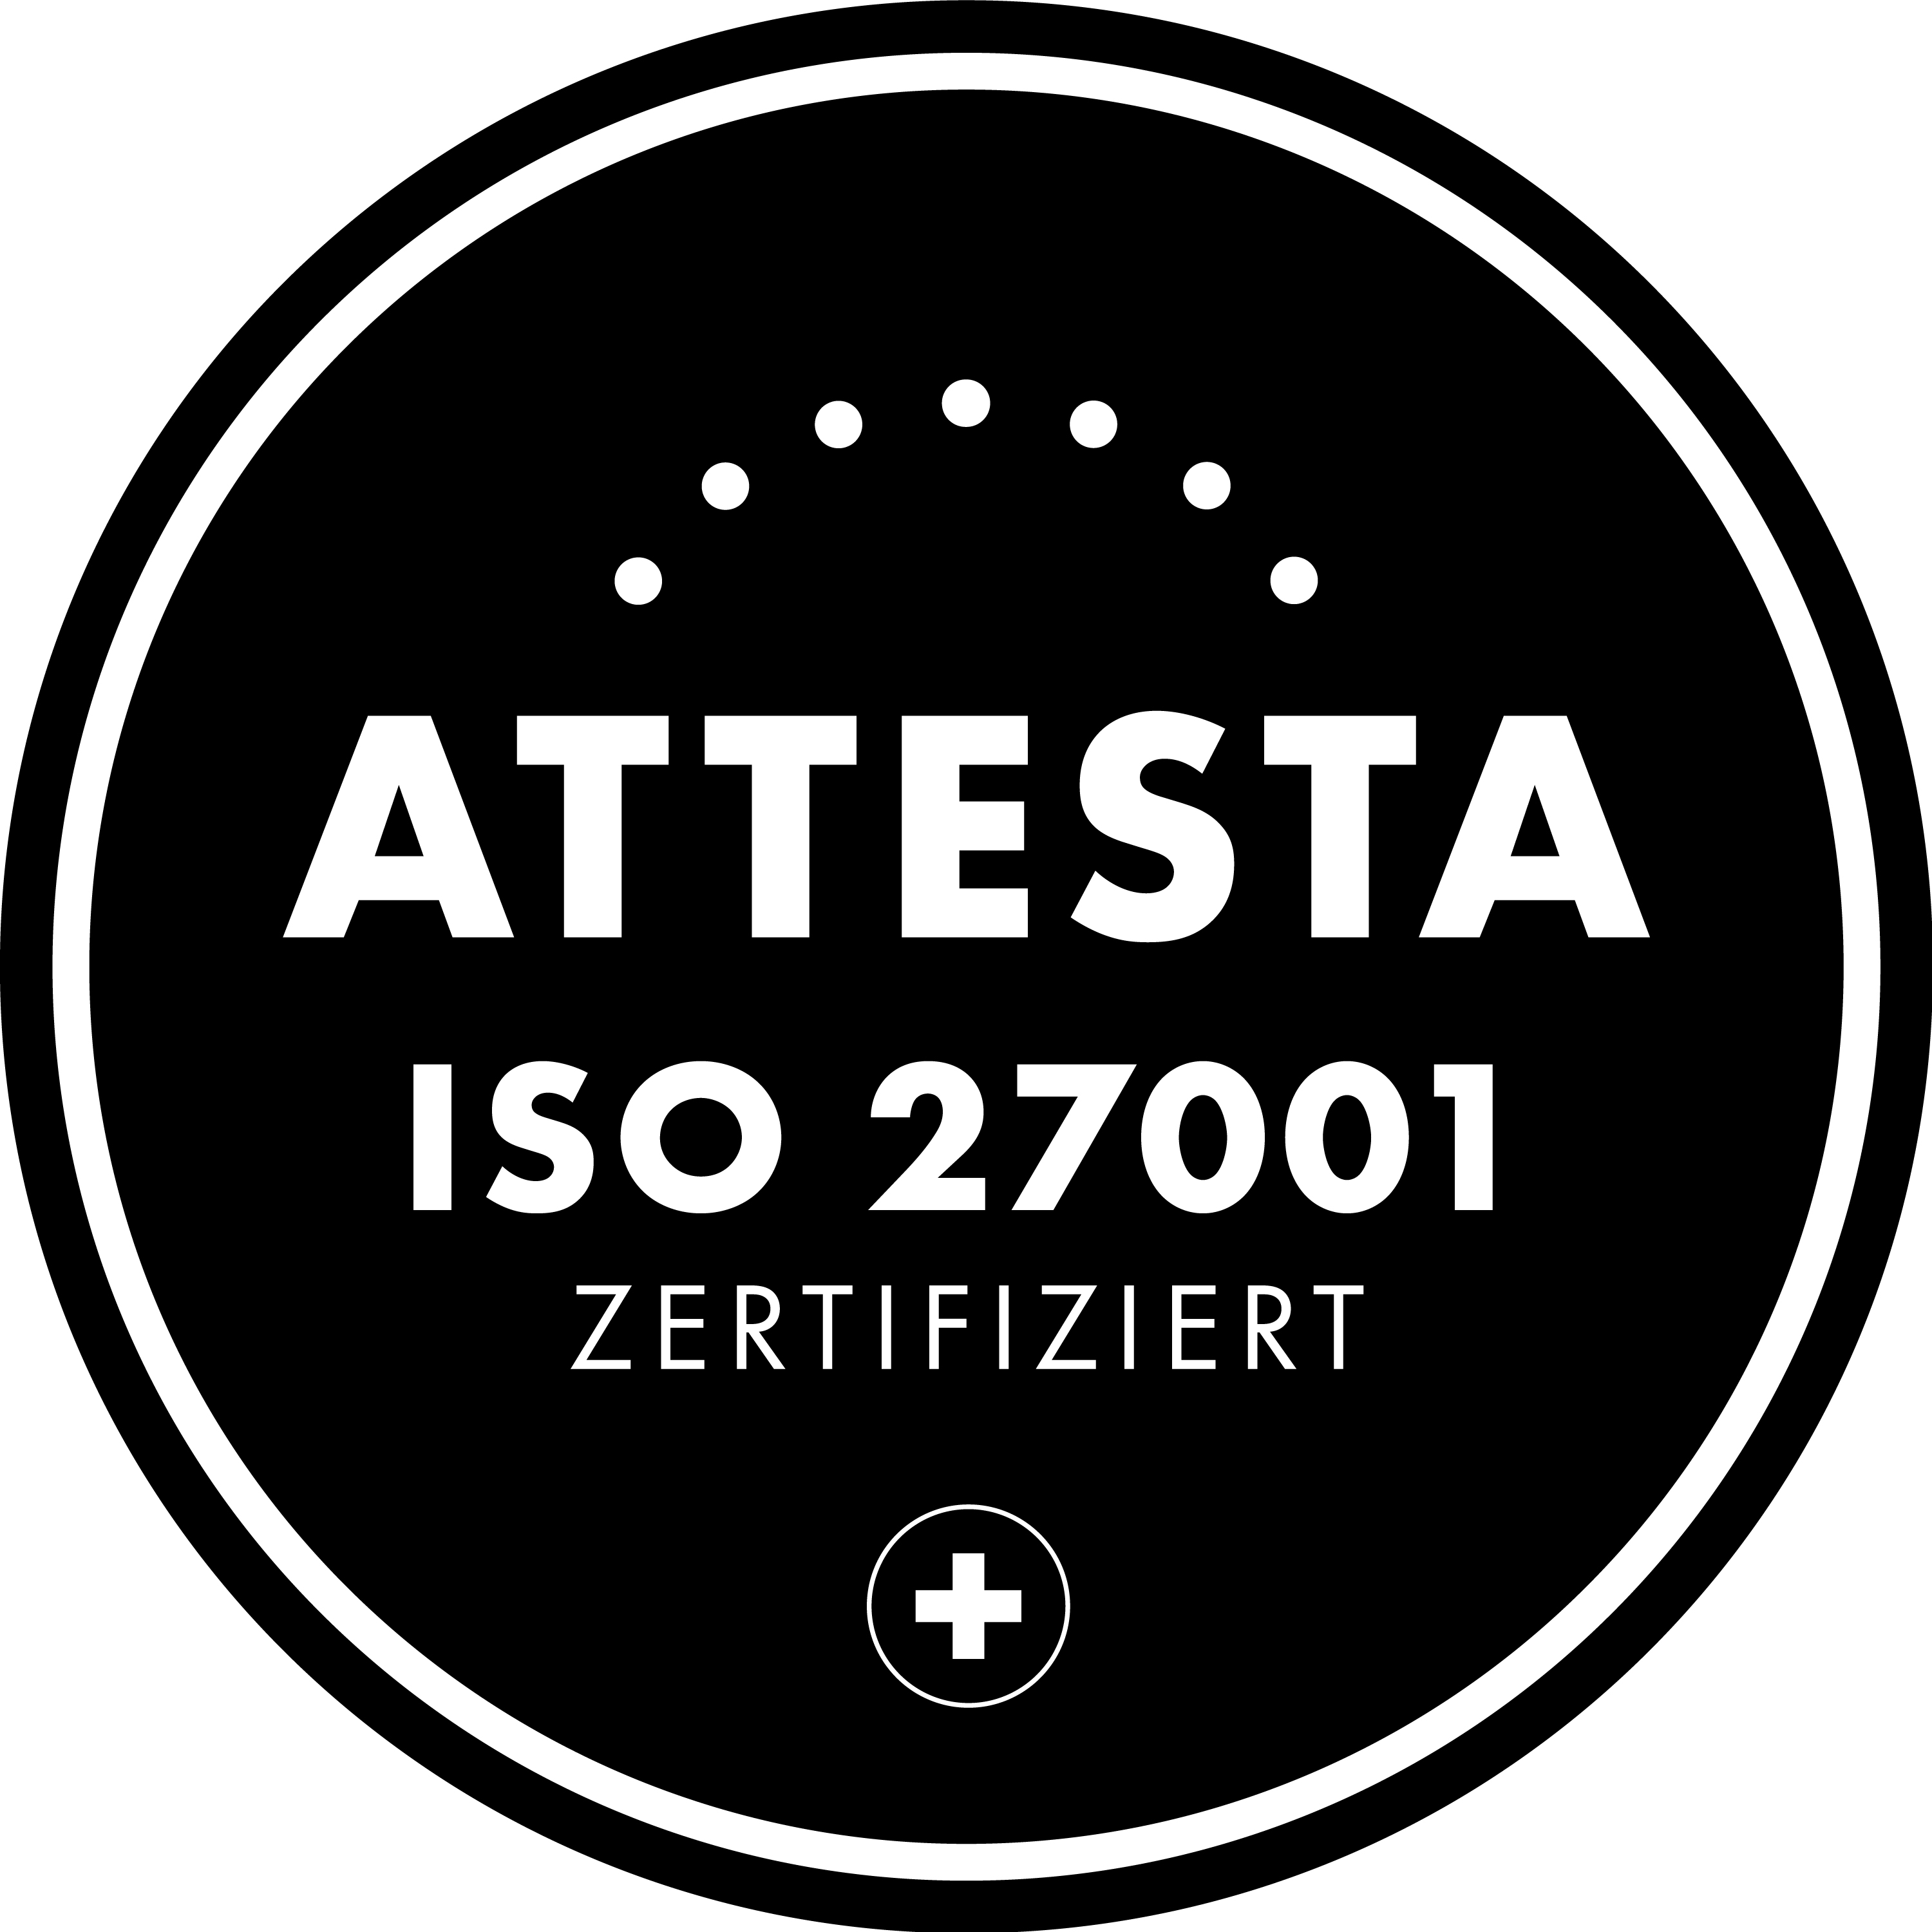 ATTESTA ISO 27001 zertifiziert